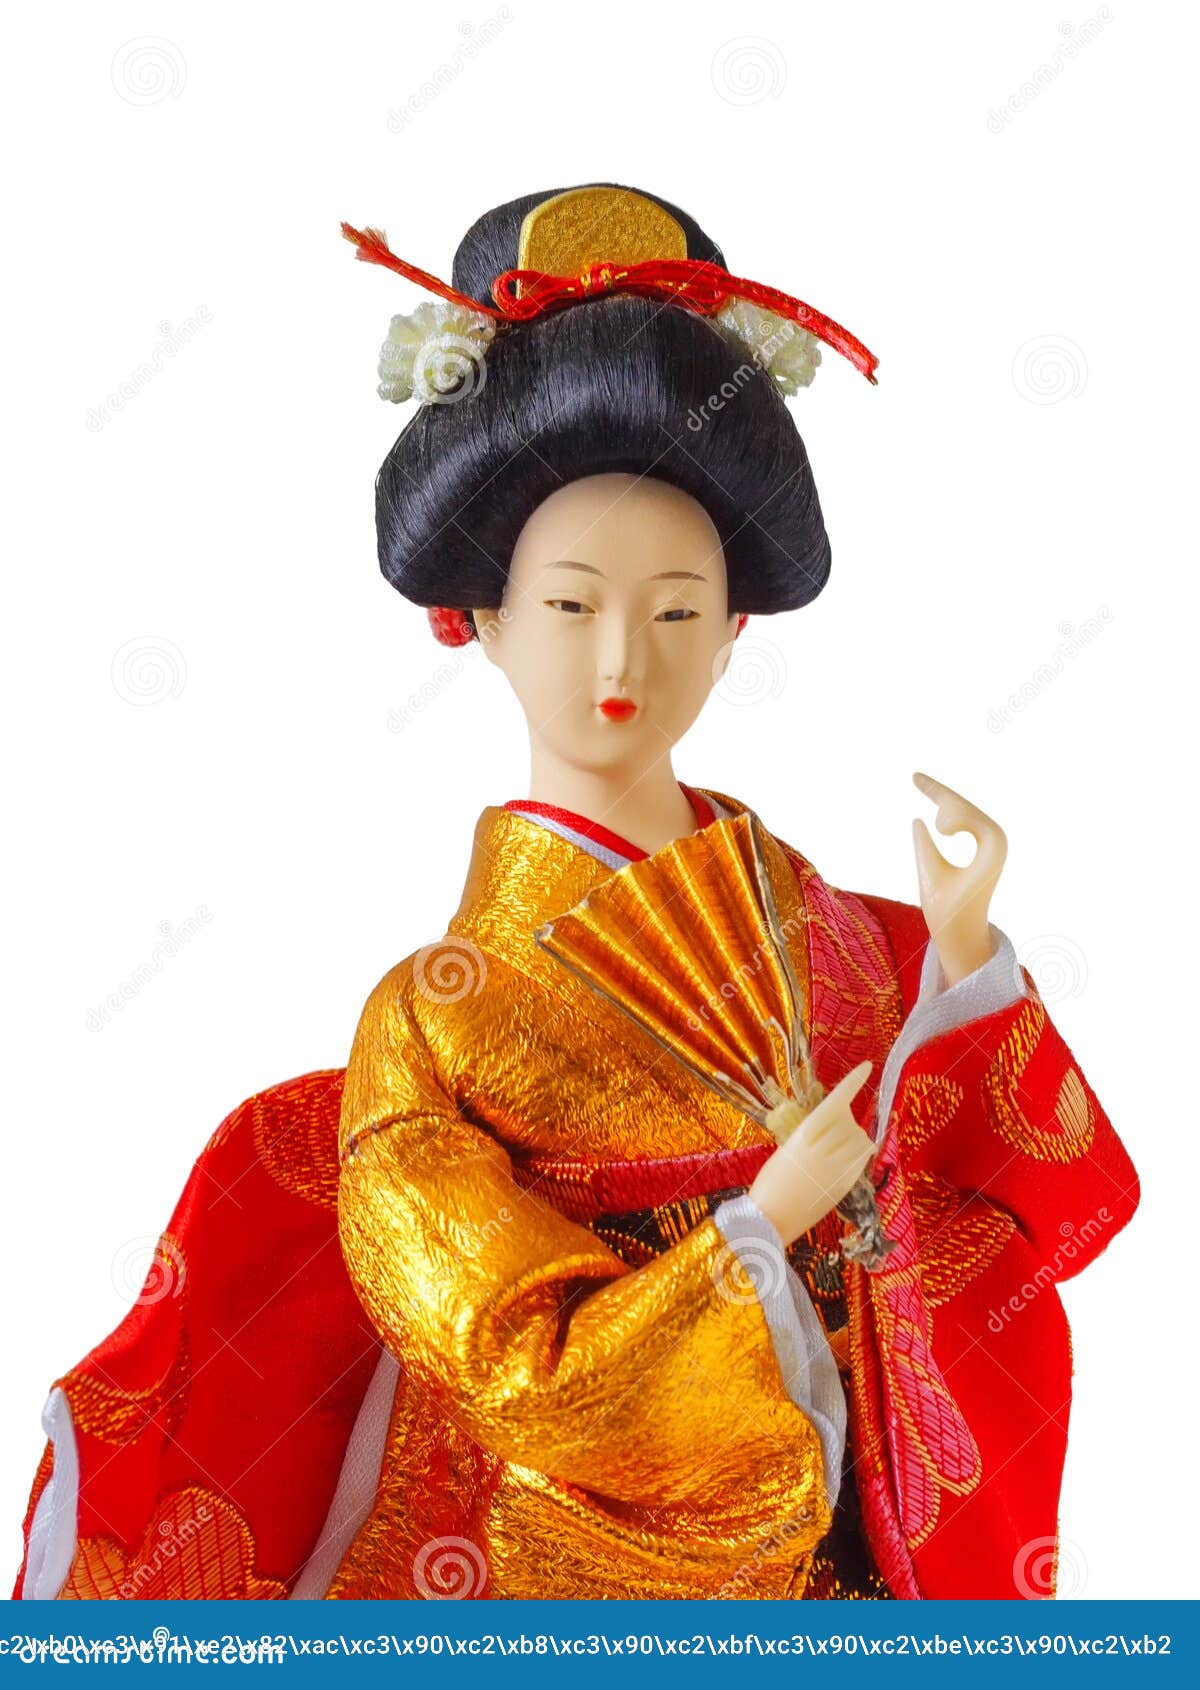 Souvenir Japanese doll stock image. Image of female - 182870207